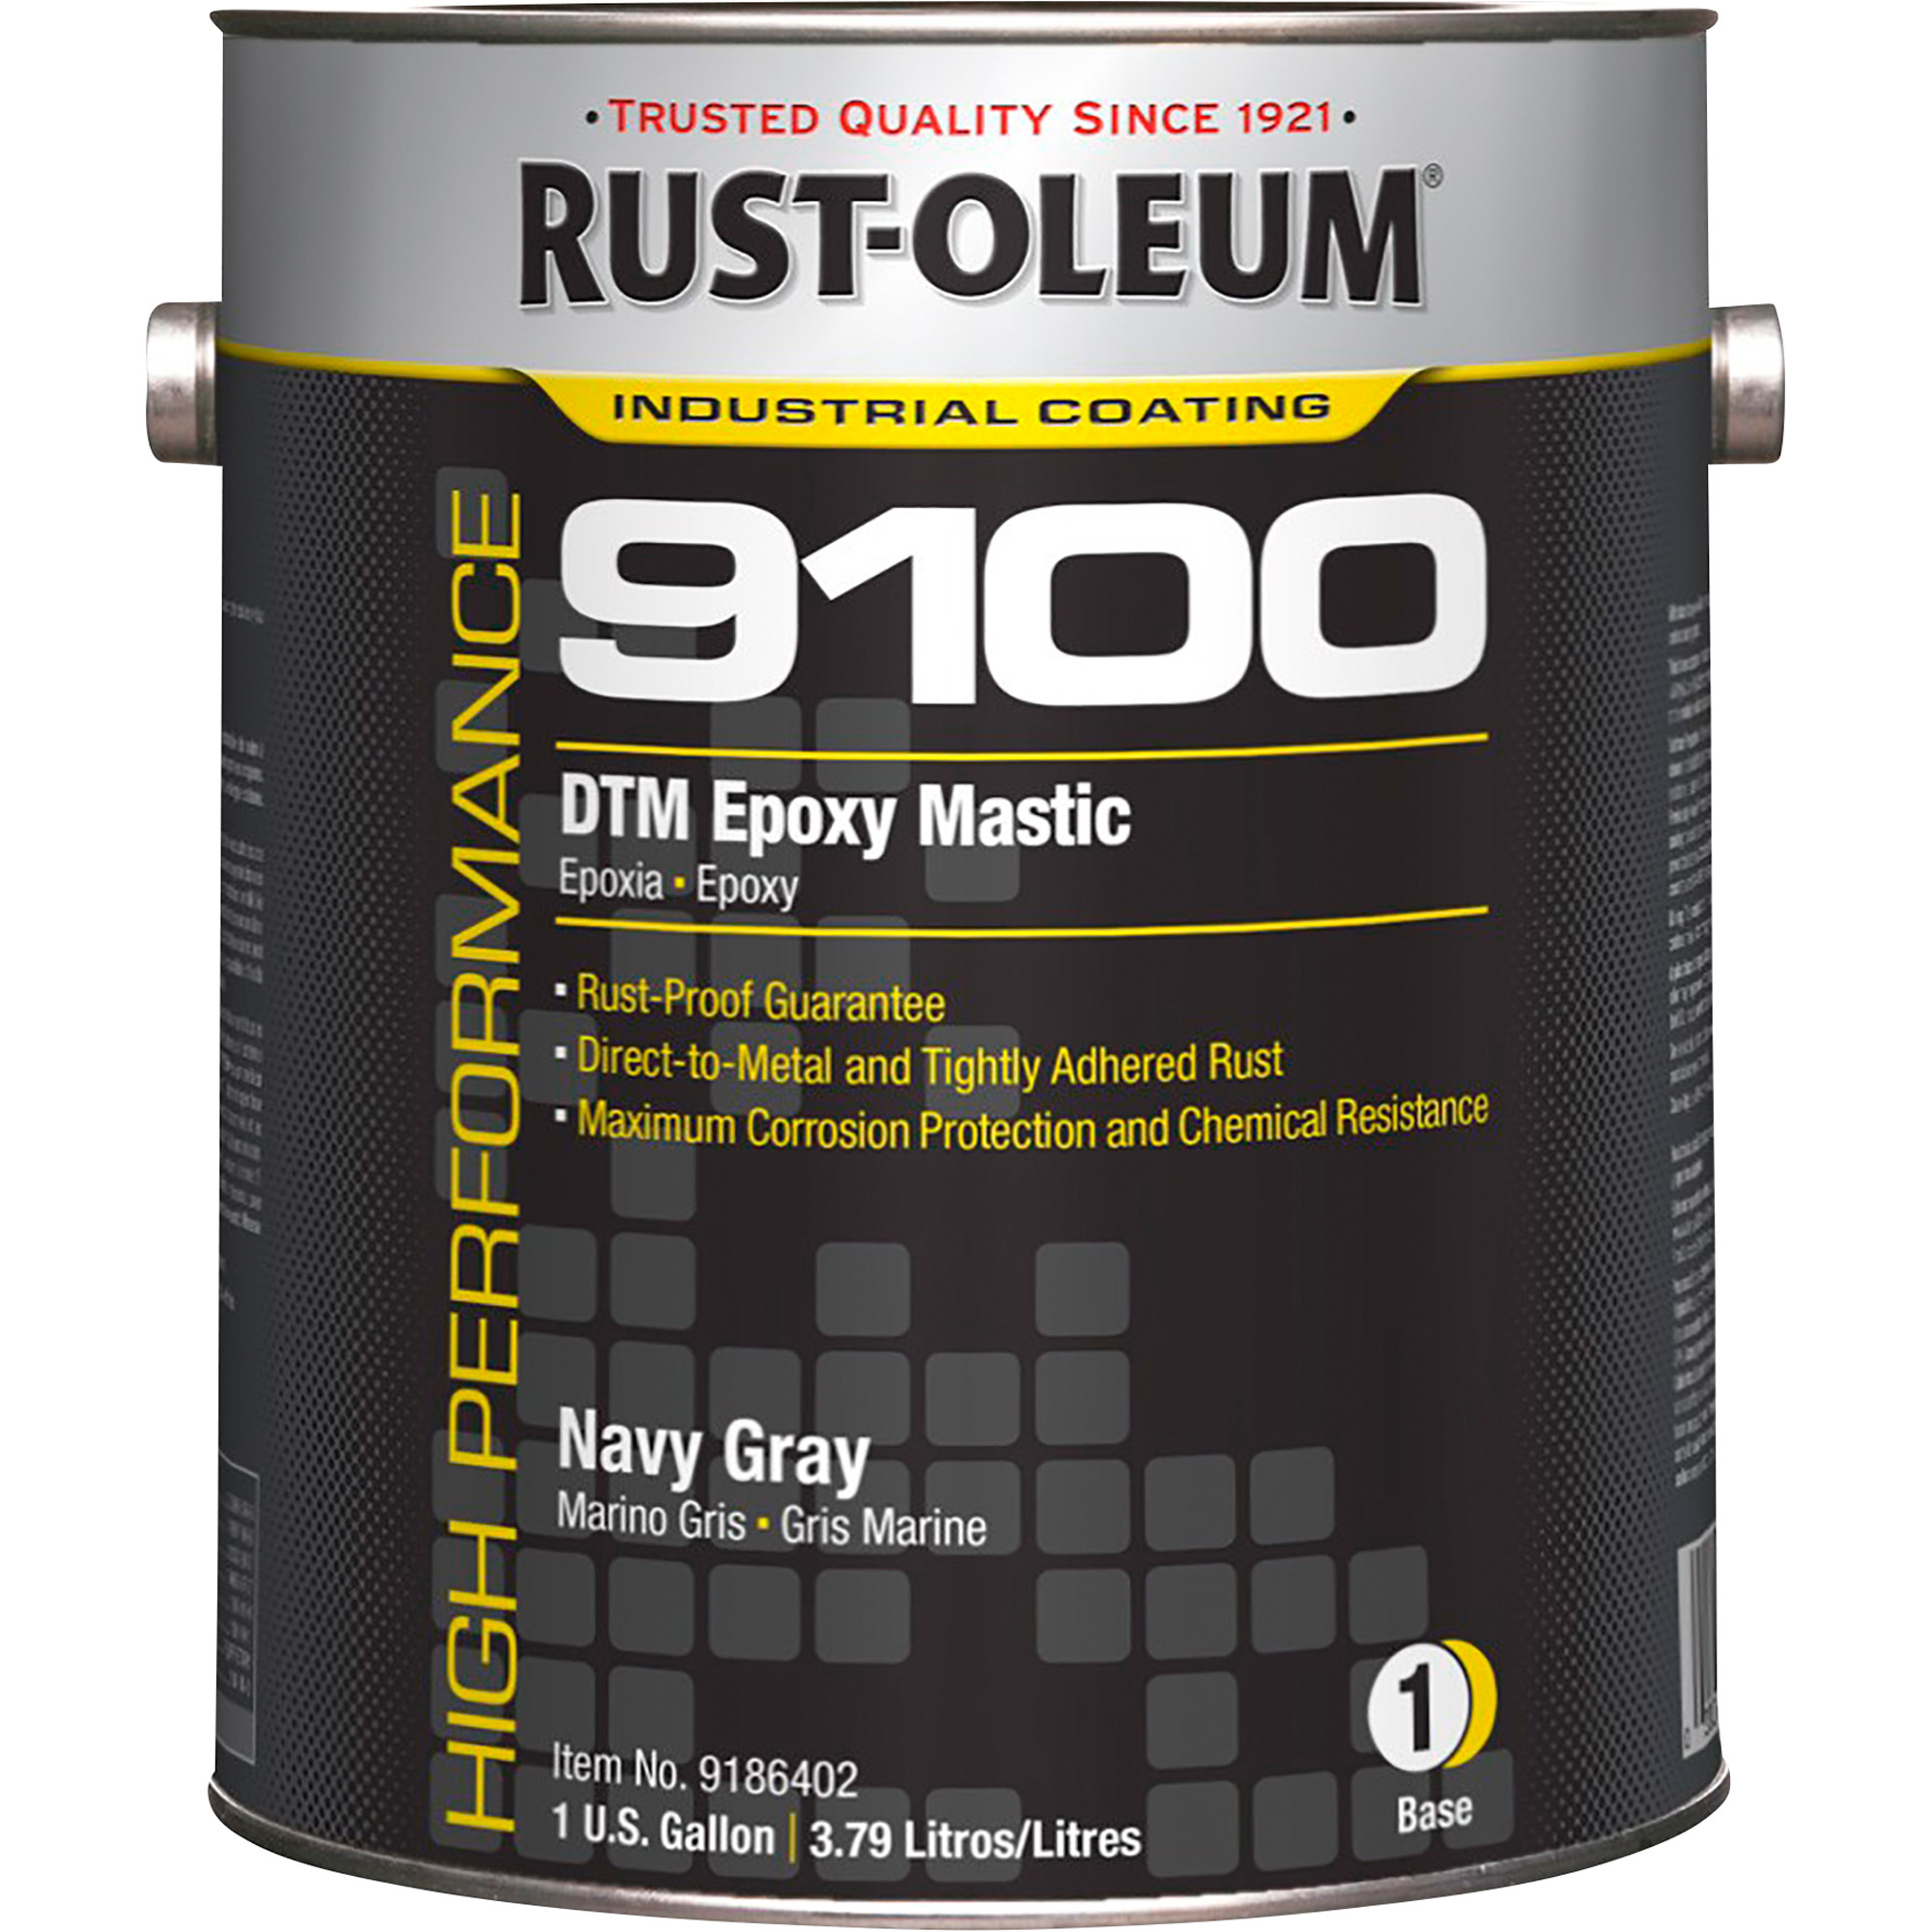 Rust-Oleum 9100 Epoxy, (1) 5-Gallon Pail, Navy Gray